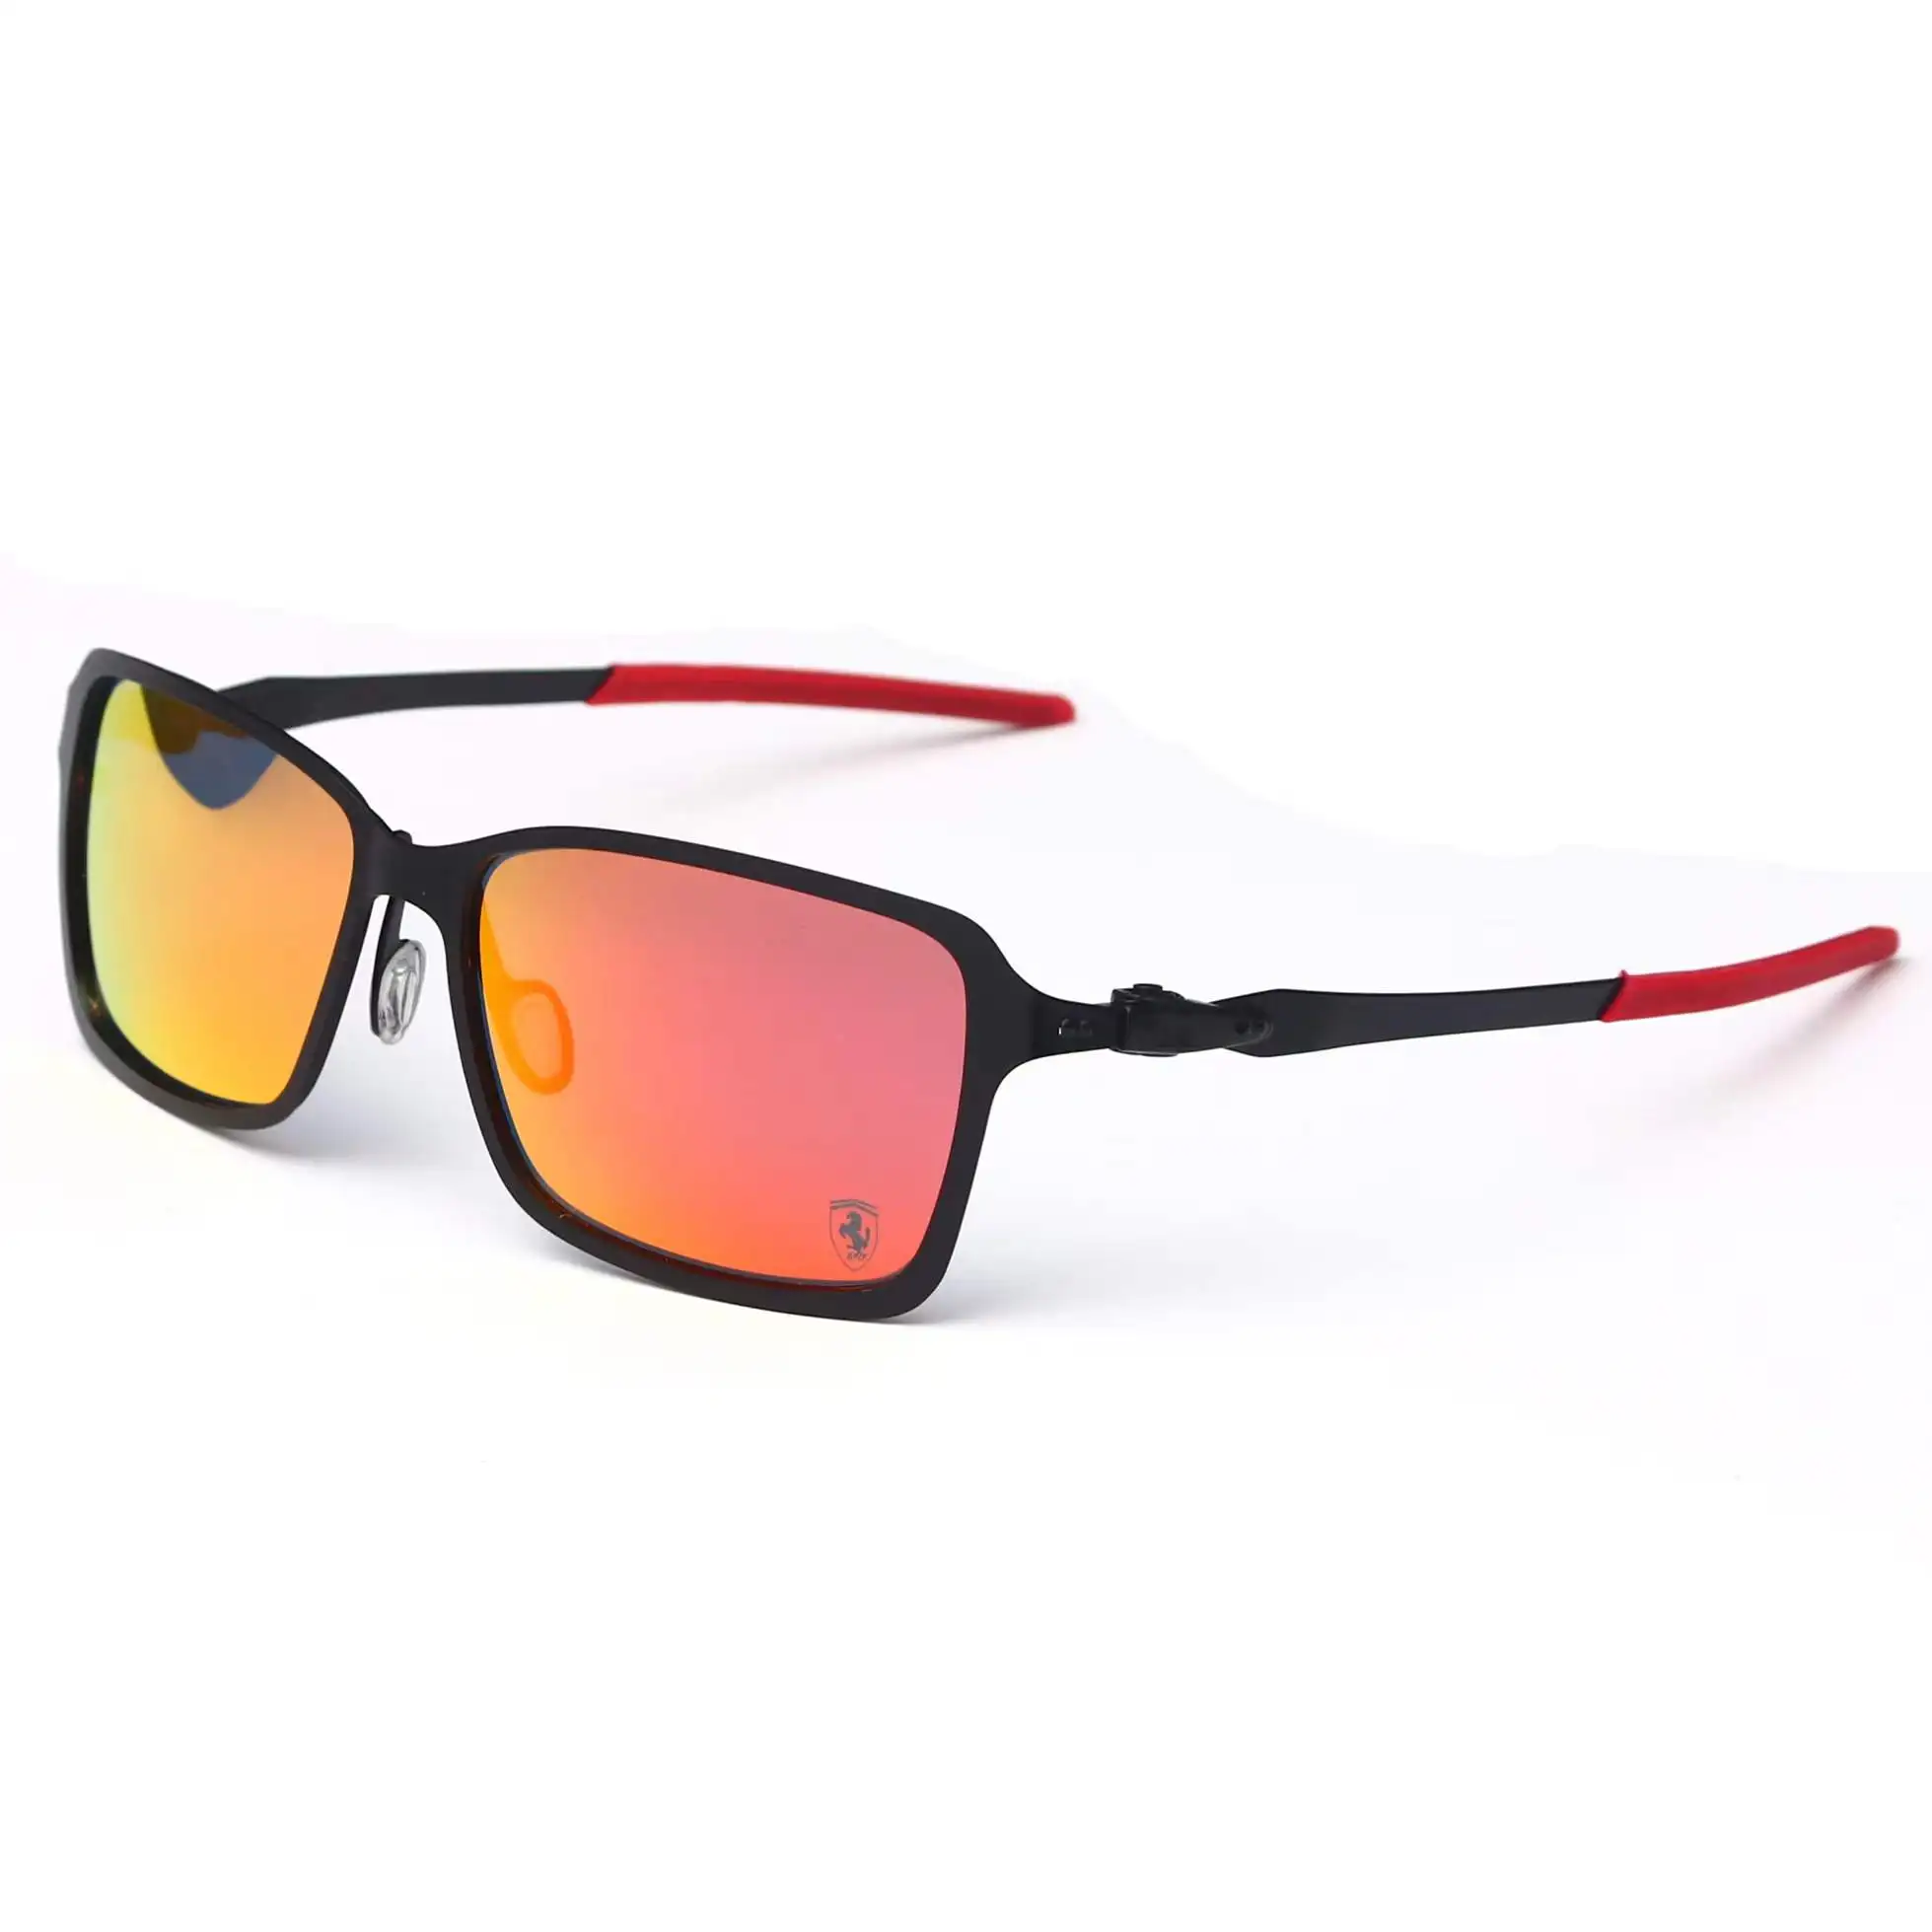 Metal Frame Cycling Glasses Outdoor Sports Eyewear sunglasses men Women Goggles Polarized Sunglasses